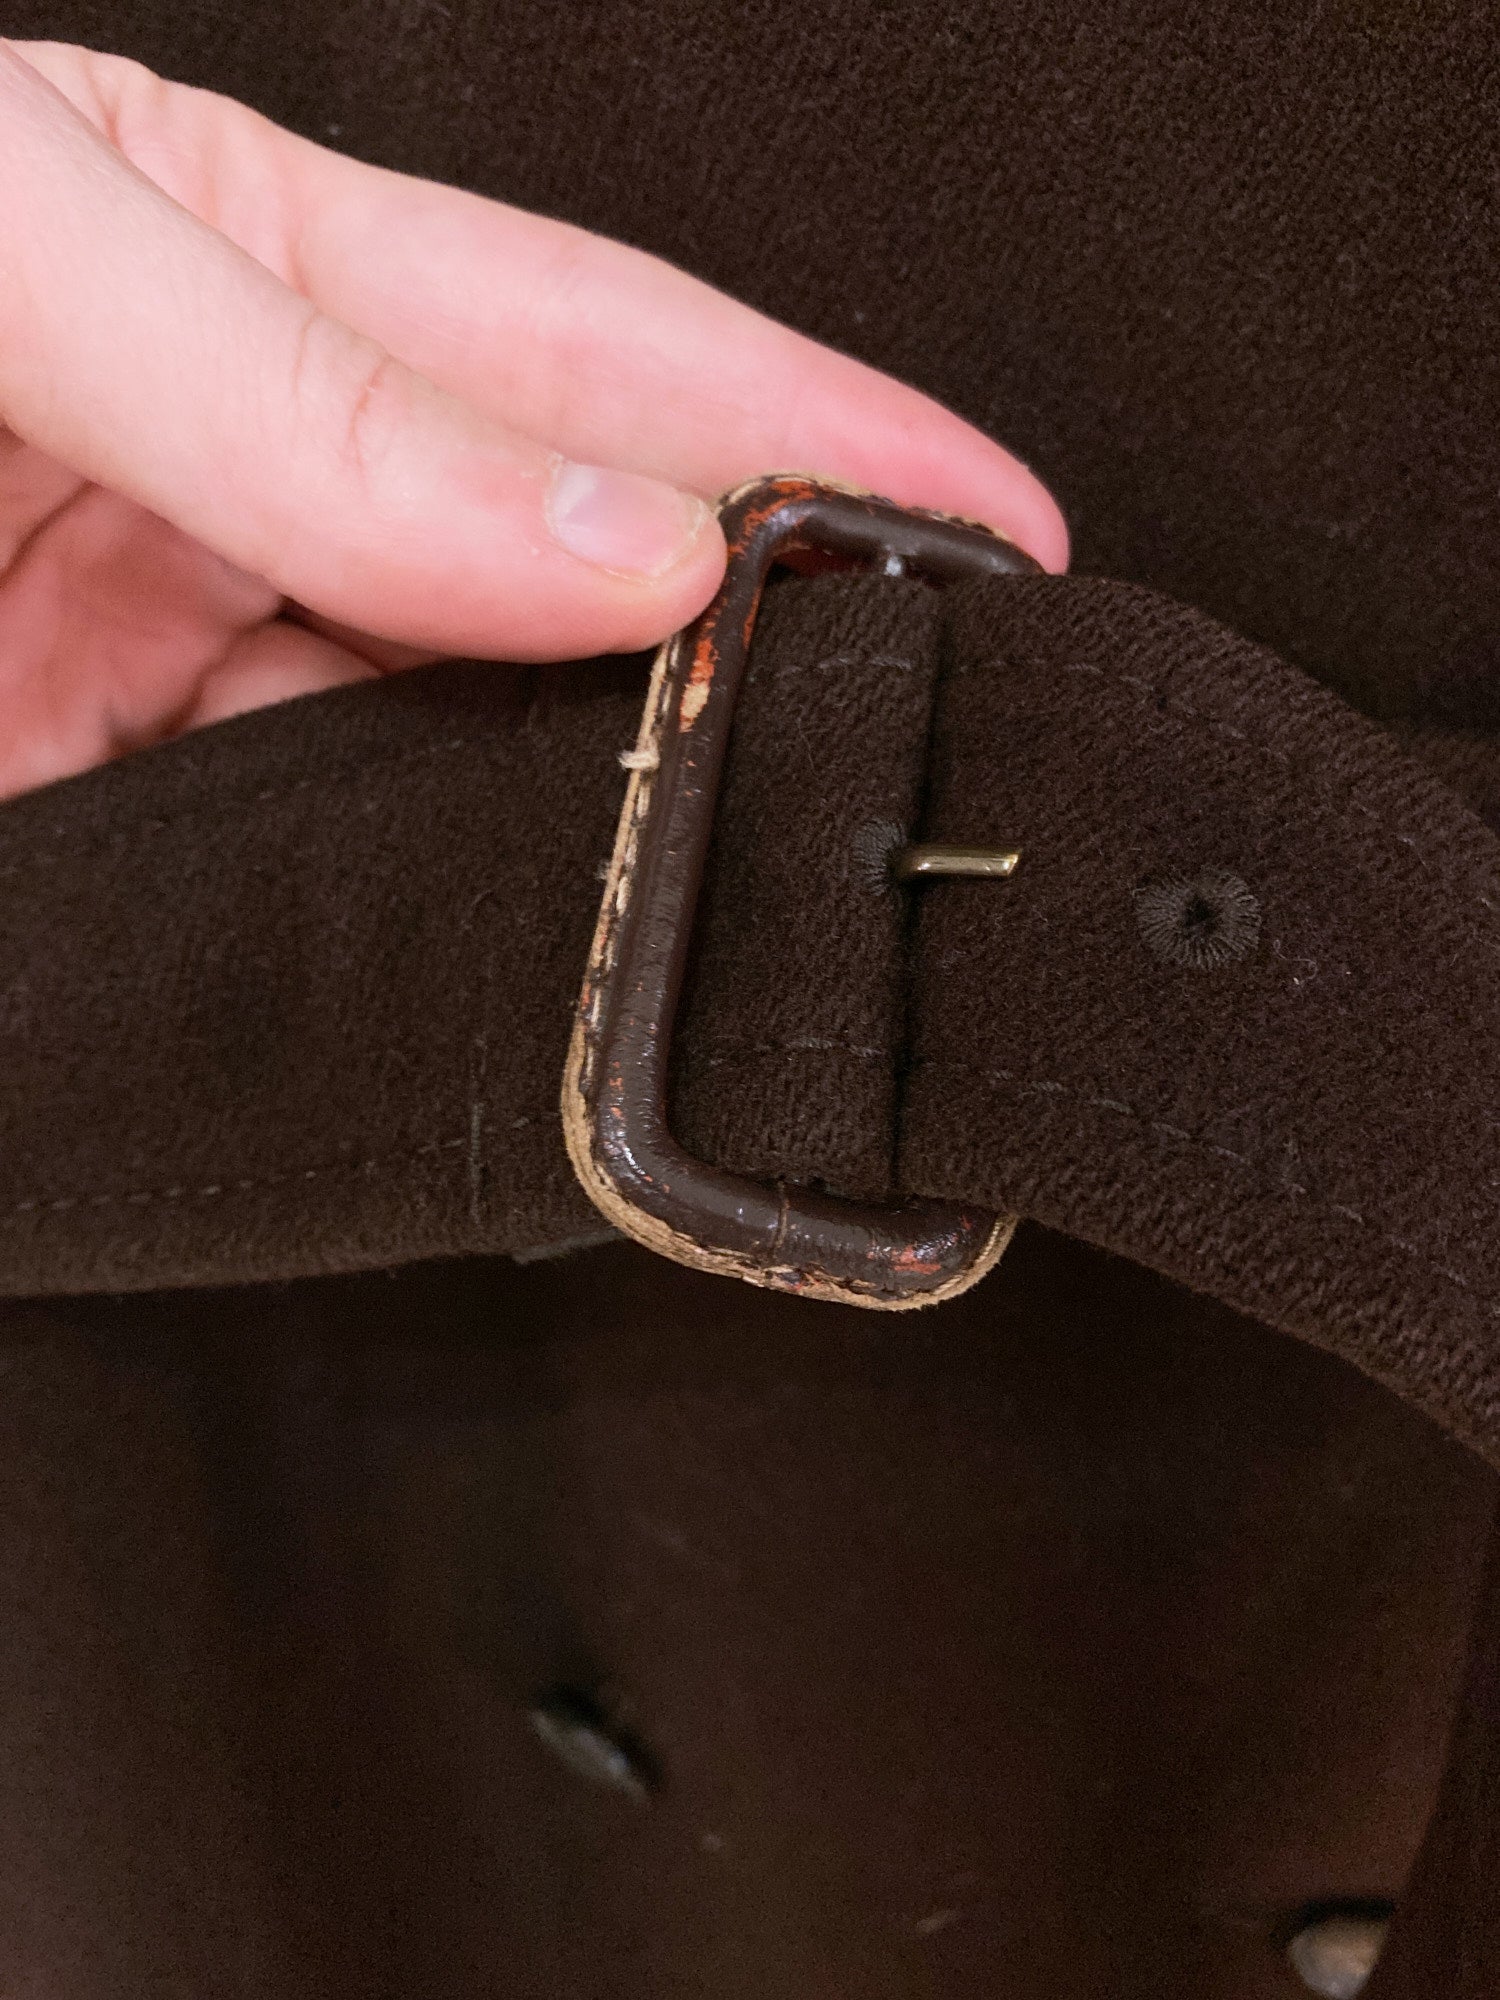 Veronique Branquinho brown wool melton houndstooth lapel trench coat - sz 36